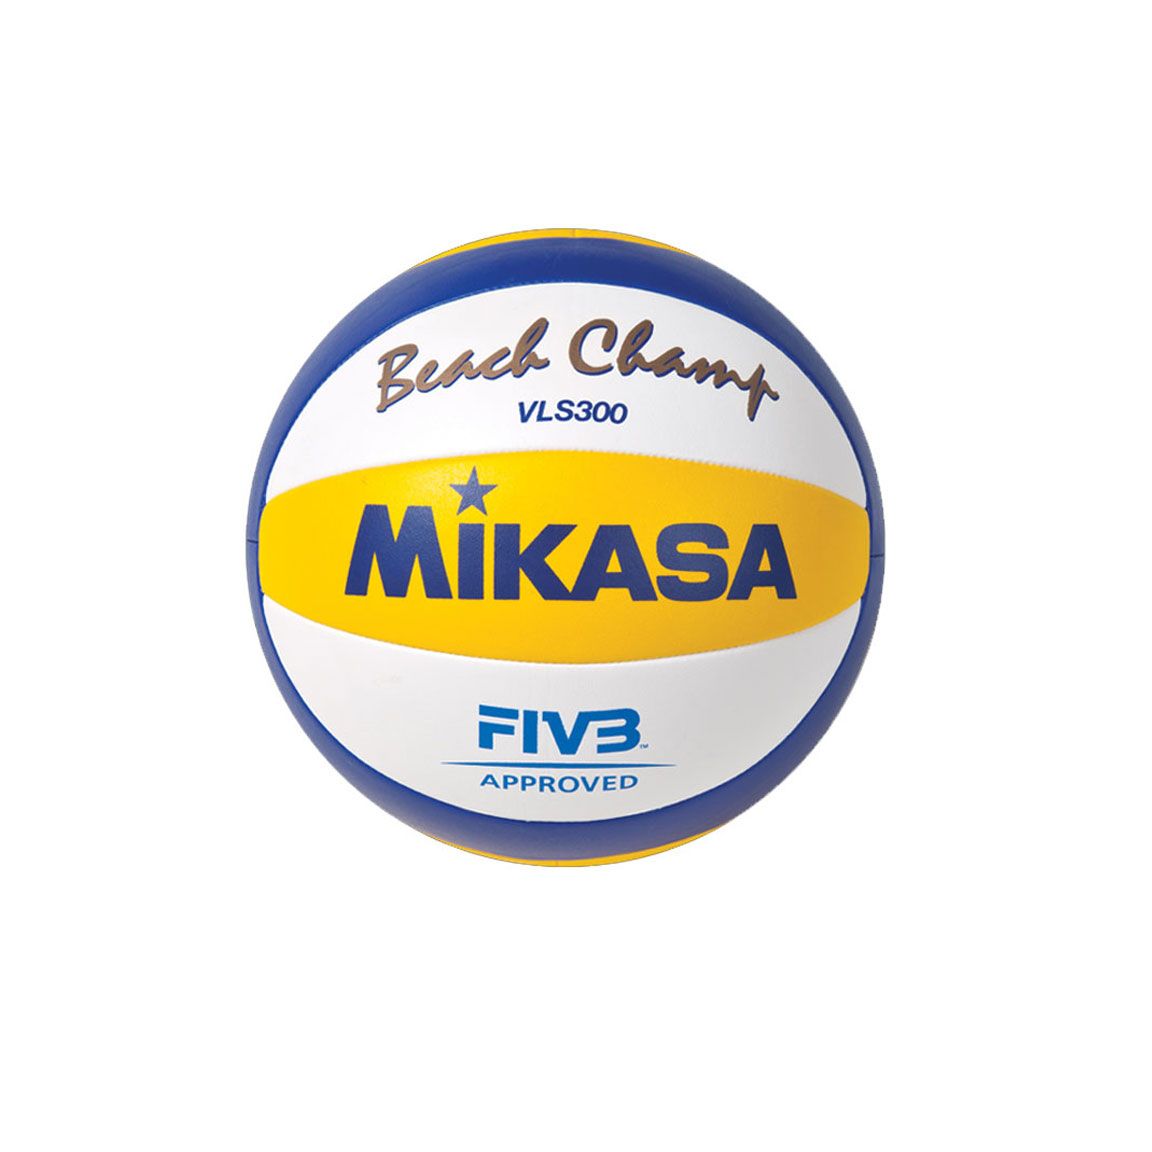 М'яч волейбольний Mikasa MGV260